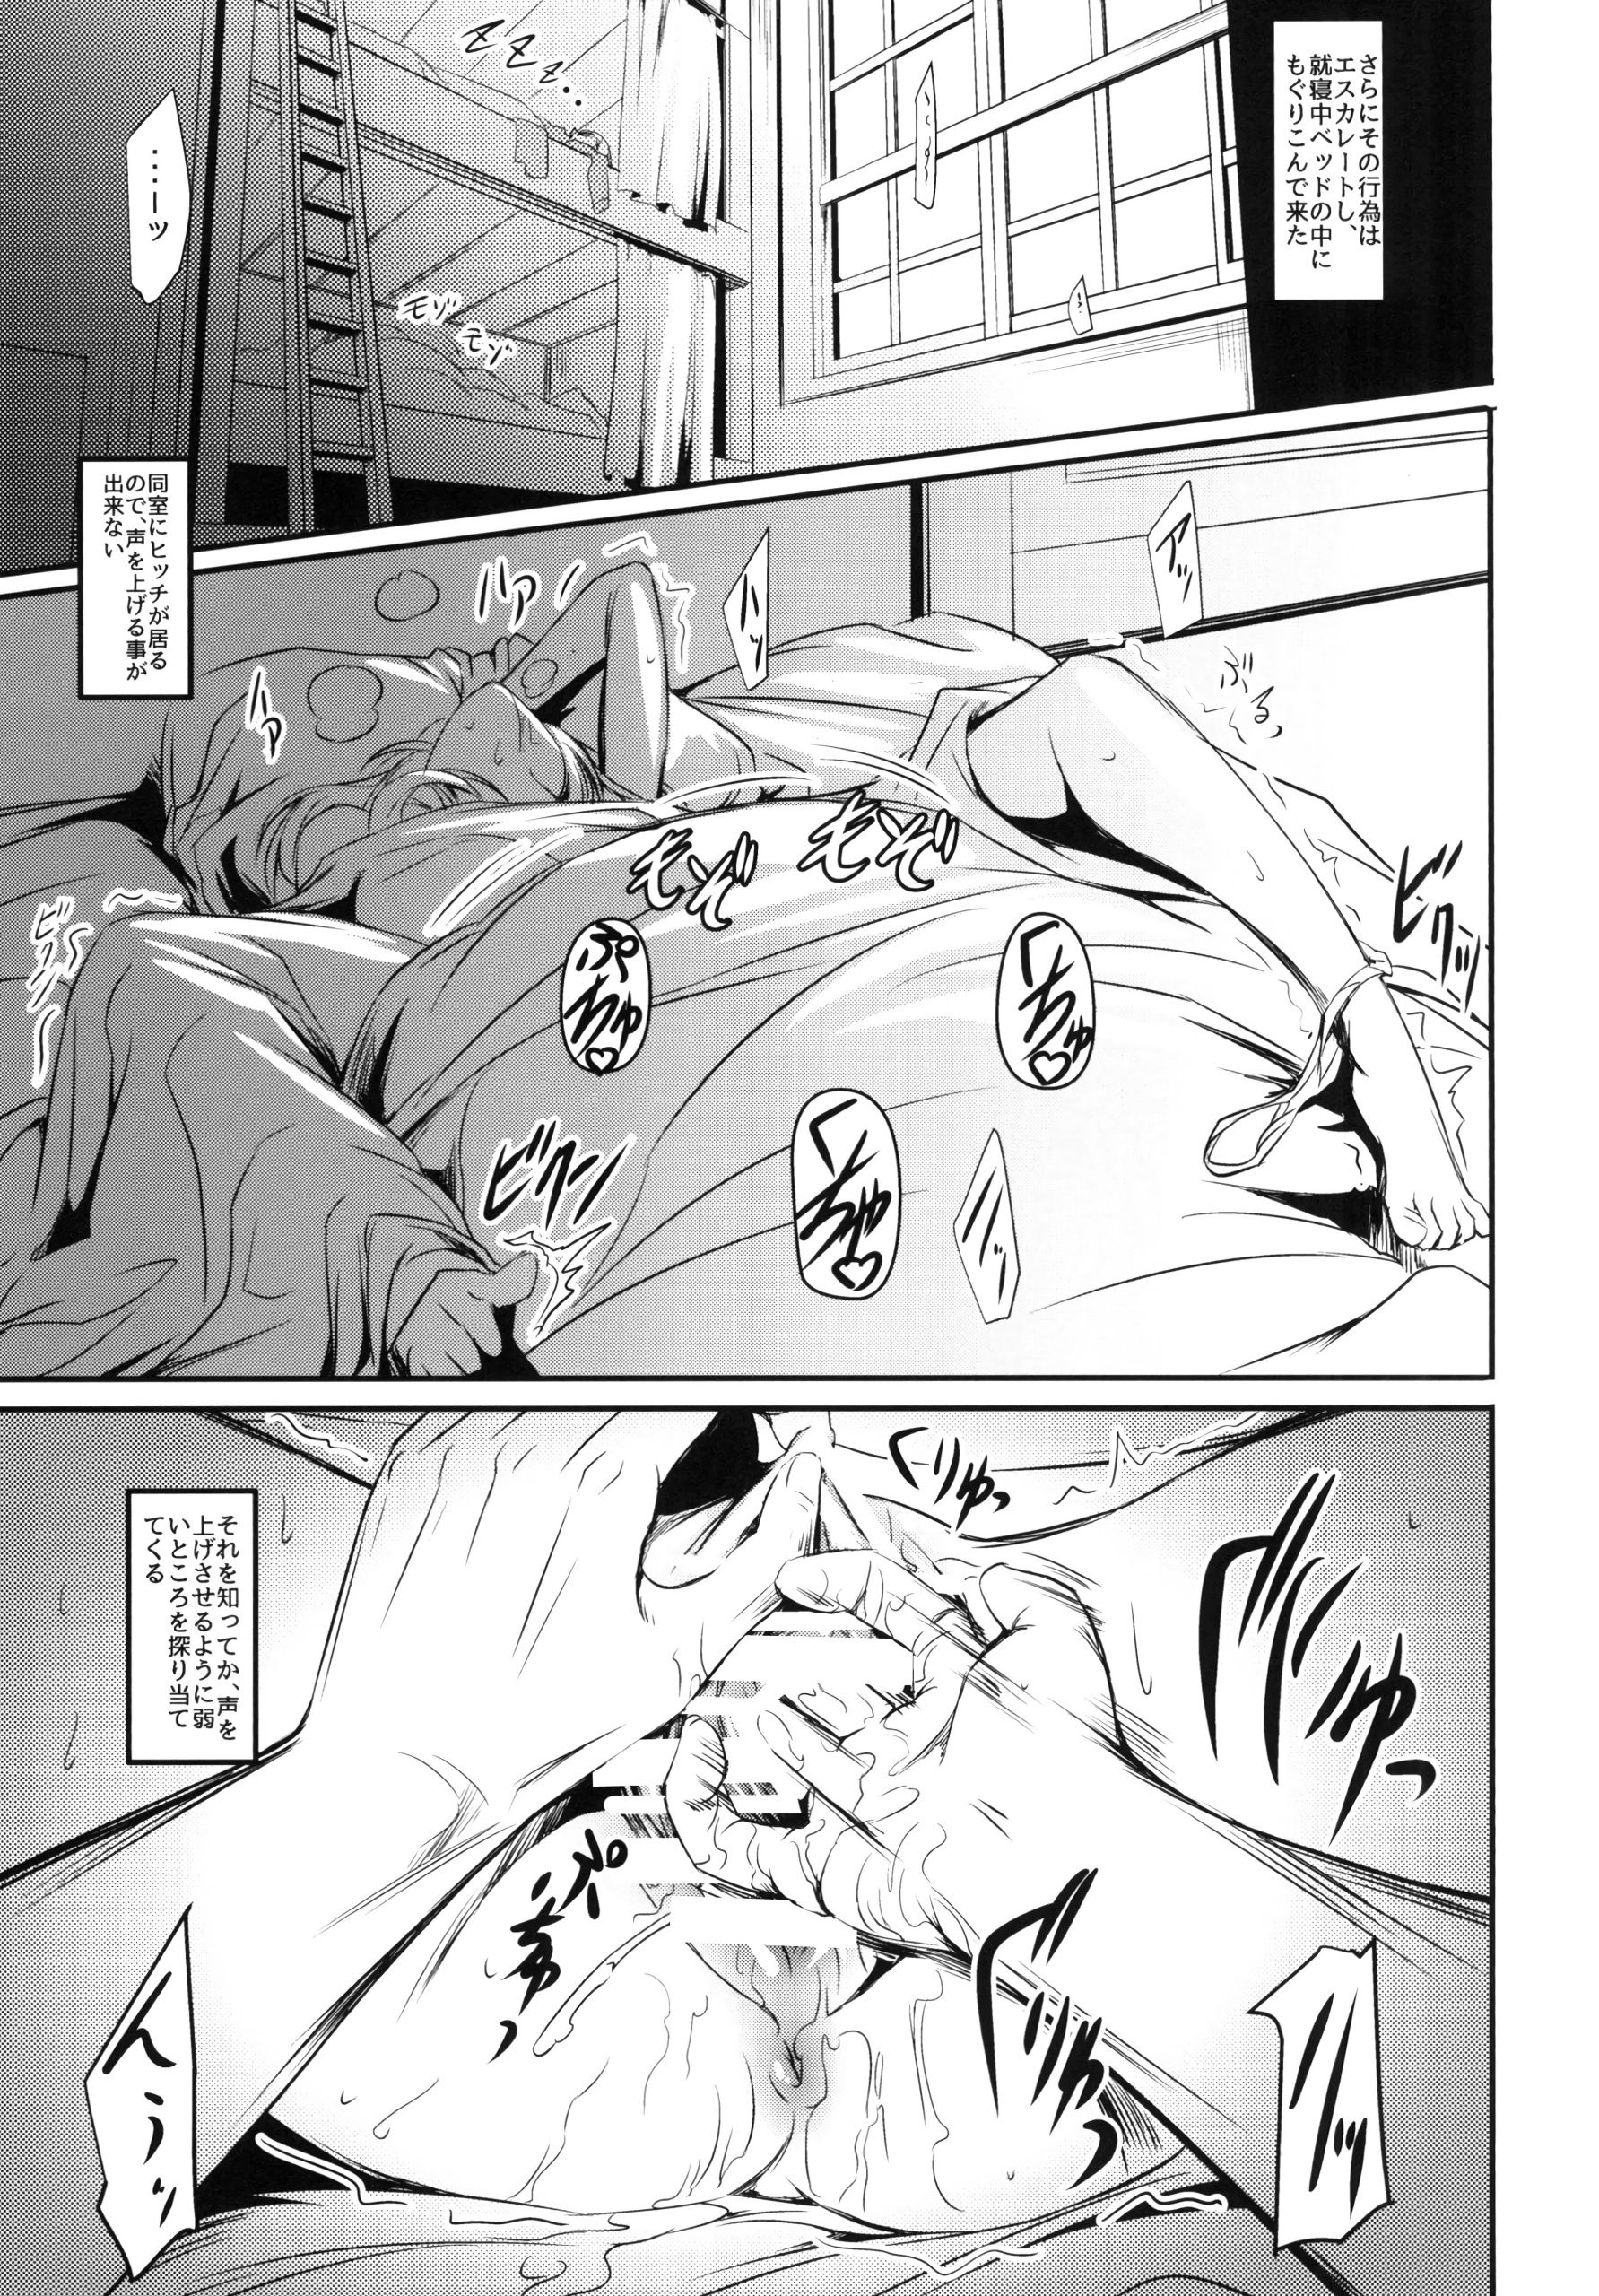 Hekinai chousa hentai manga picture 06